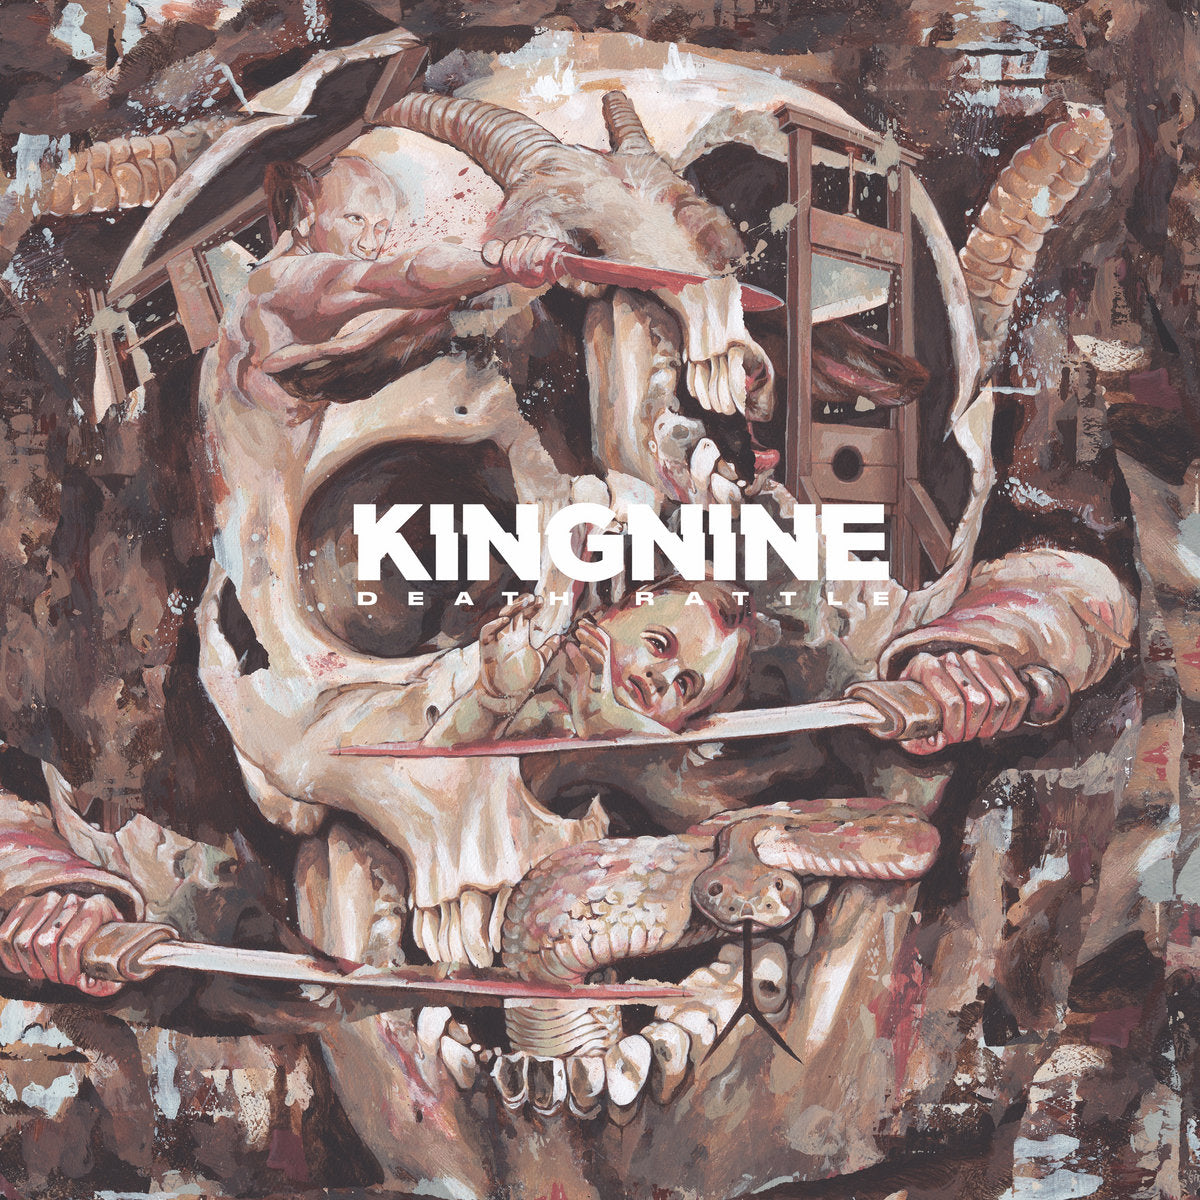 King Nine "Death Rattle" CD